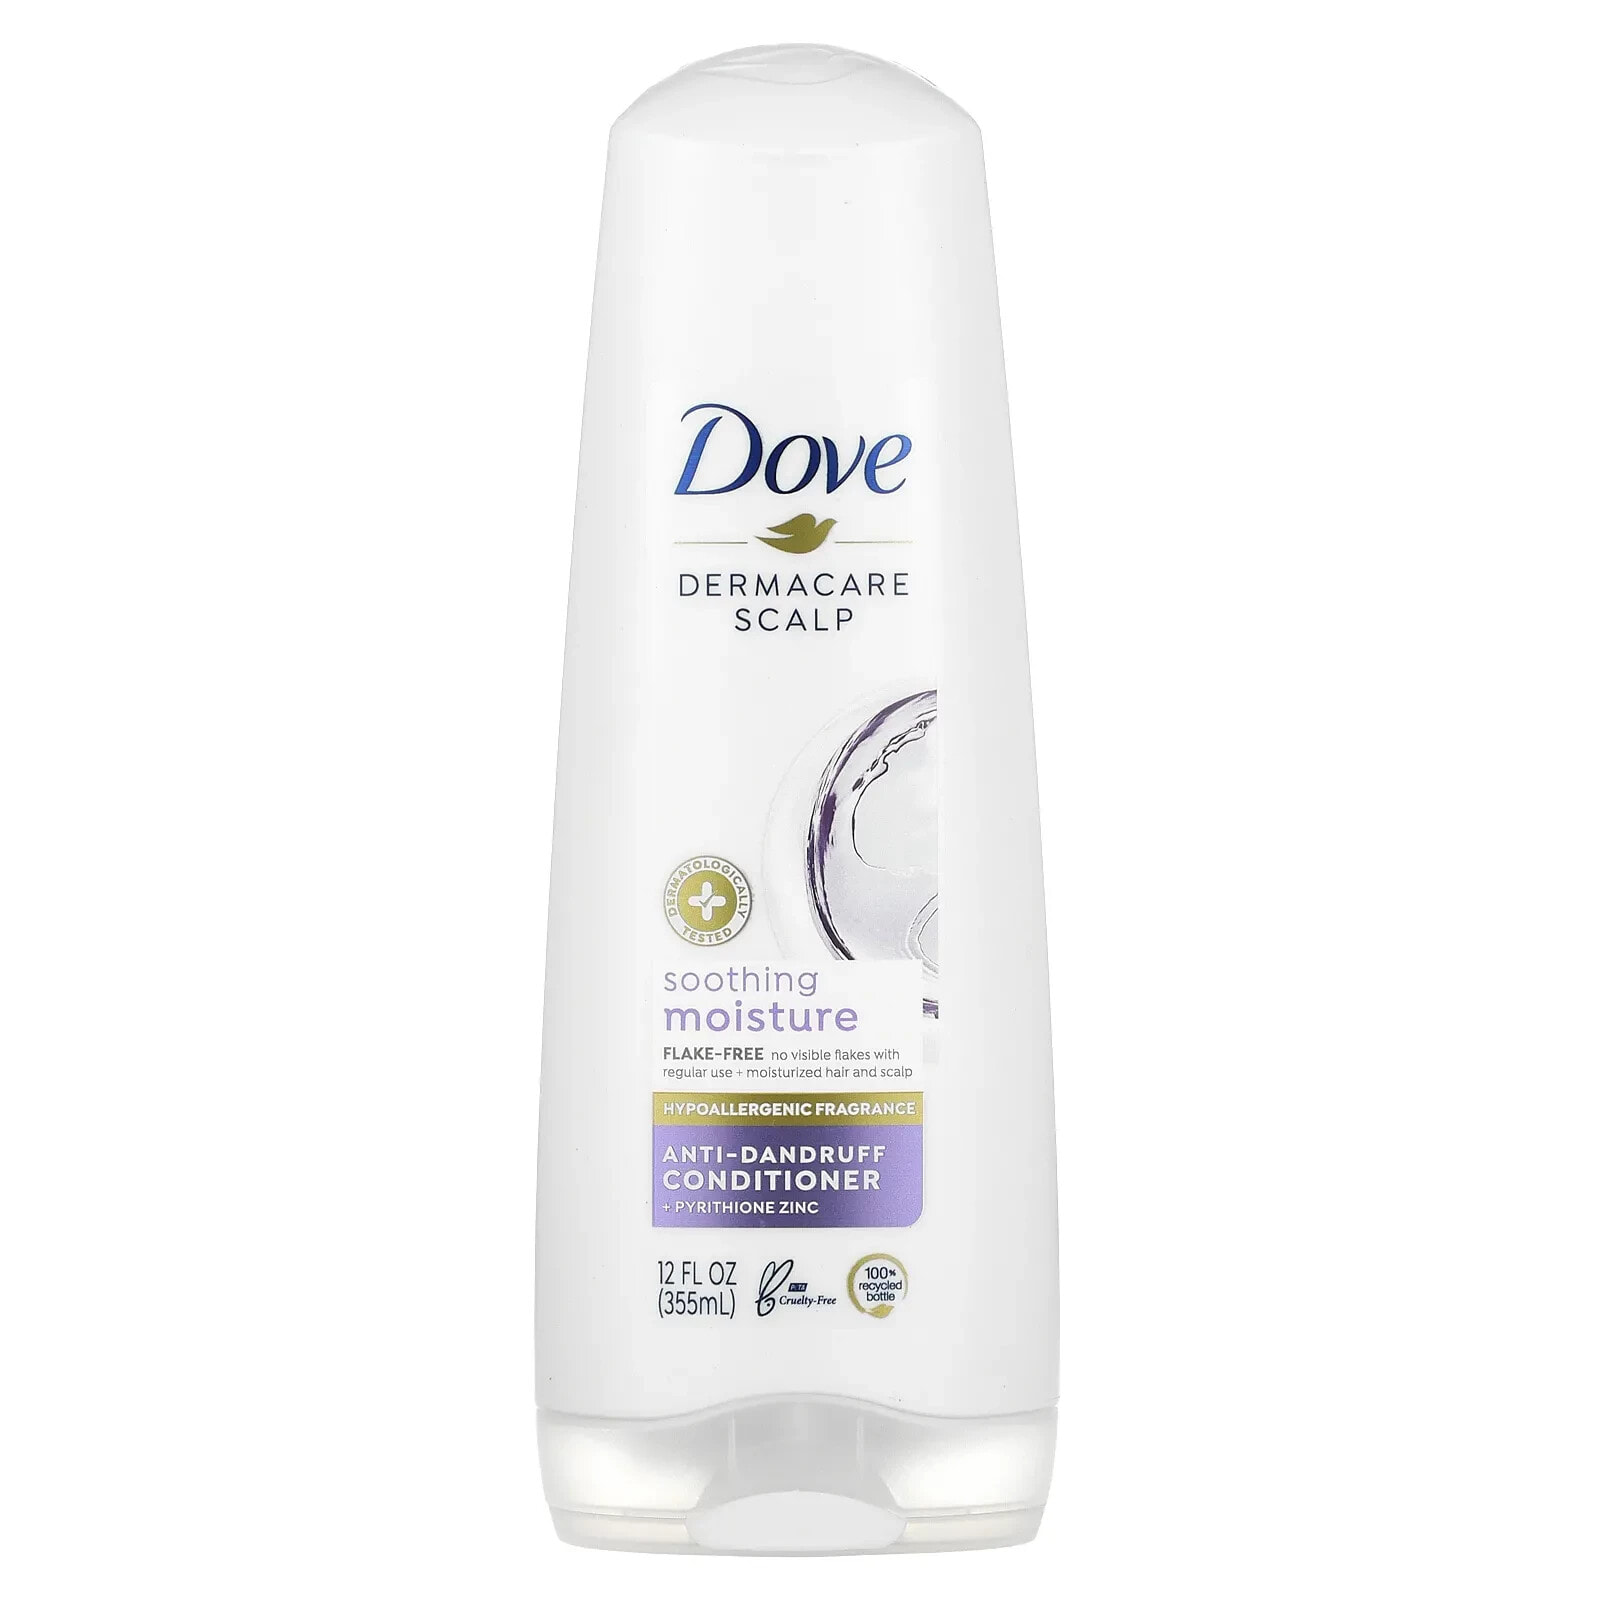 Dove Dermacare Scalp Anti-Dandruff Conditioner Успокаивающий и увлажняющий кондиционер против перхоти 355 мл